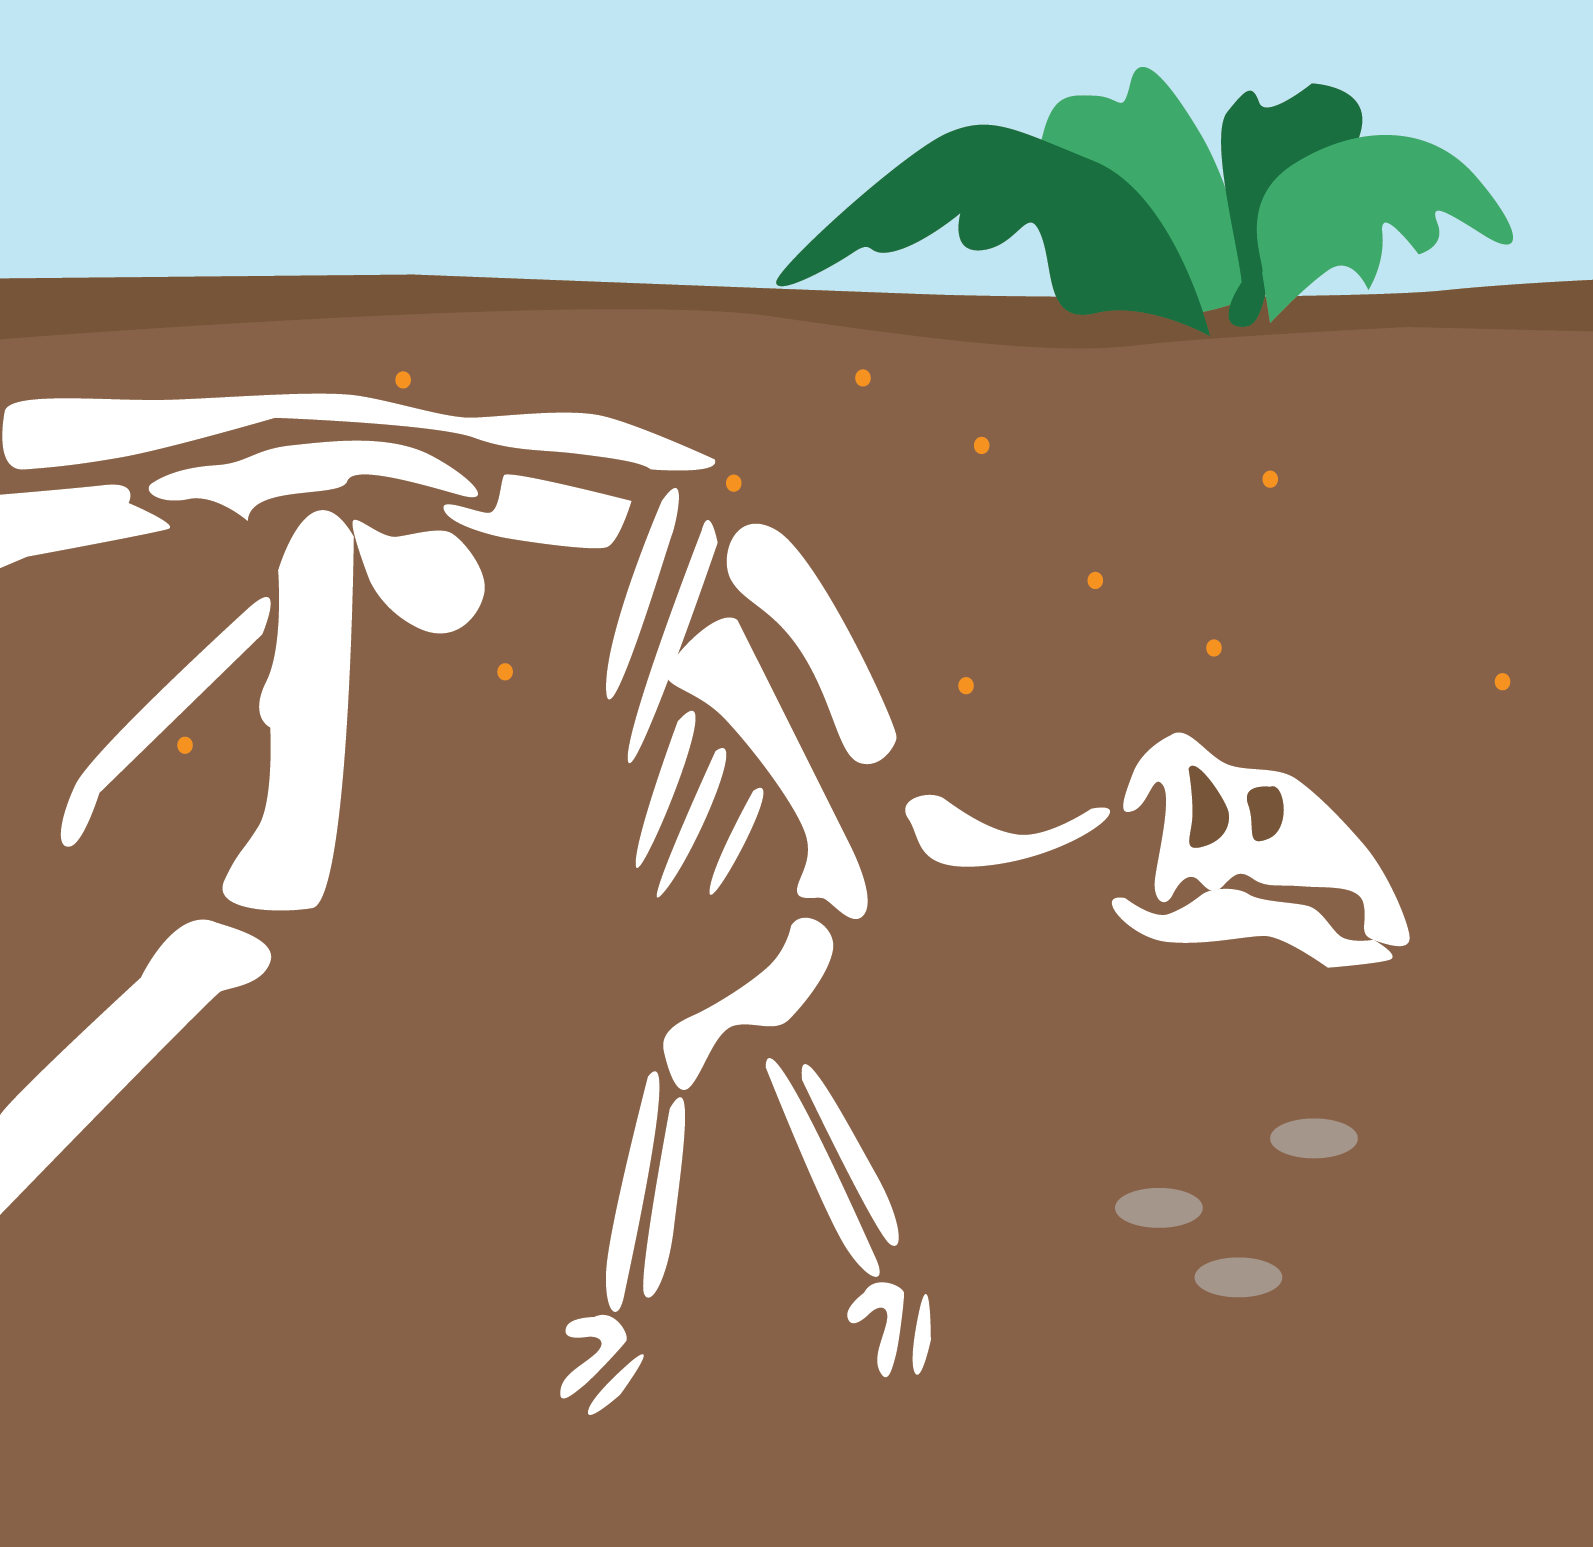 Drawing of a dinosaur skeleton